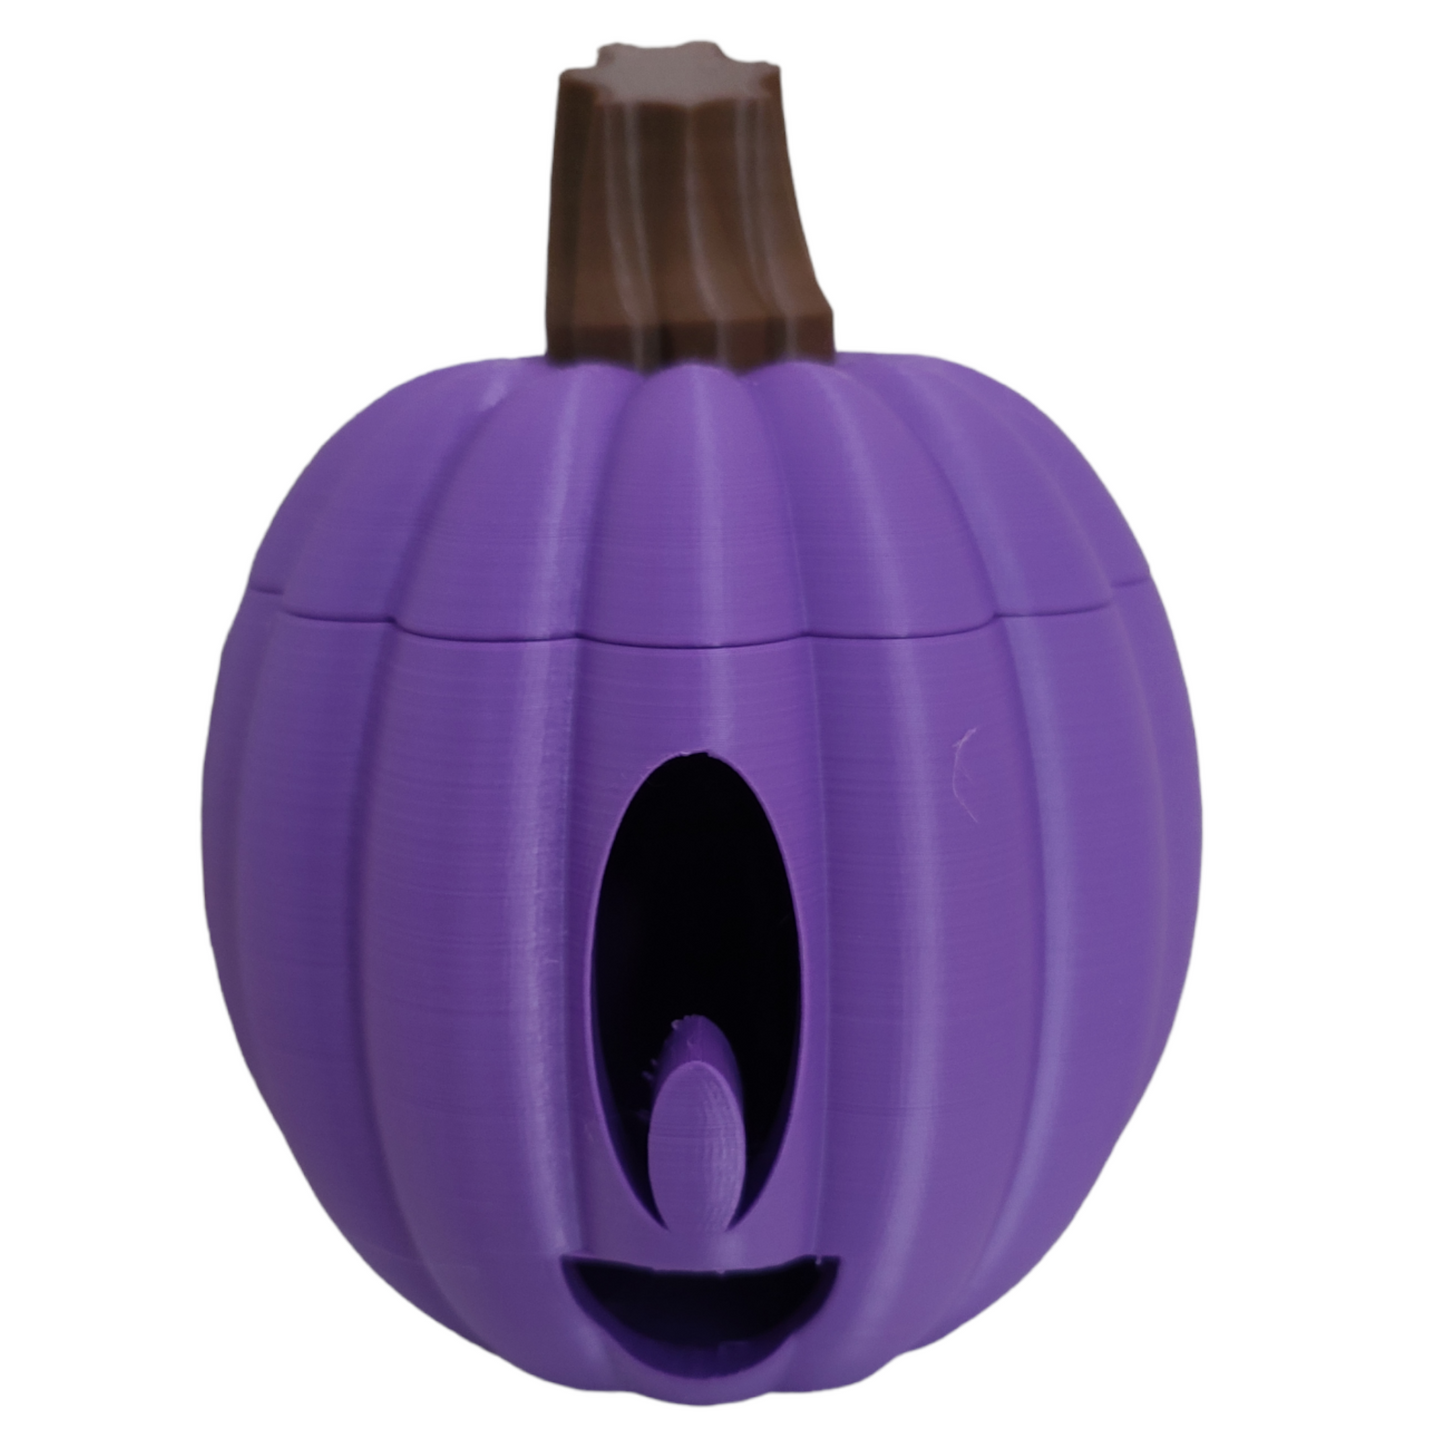 Pumpkin, 3d print, pumpkin bowl, candy holder, Halloween decoration, Fall decoration, glow in the dark, candy bowl, pumpkin with lid